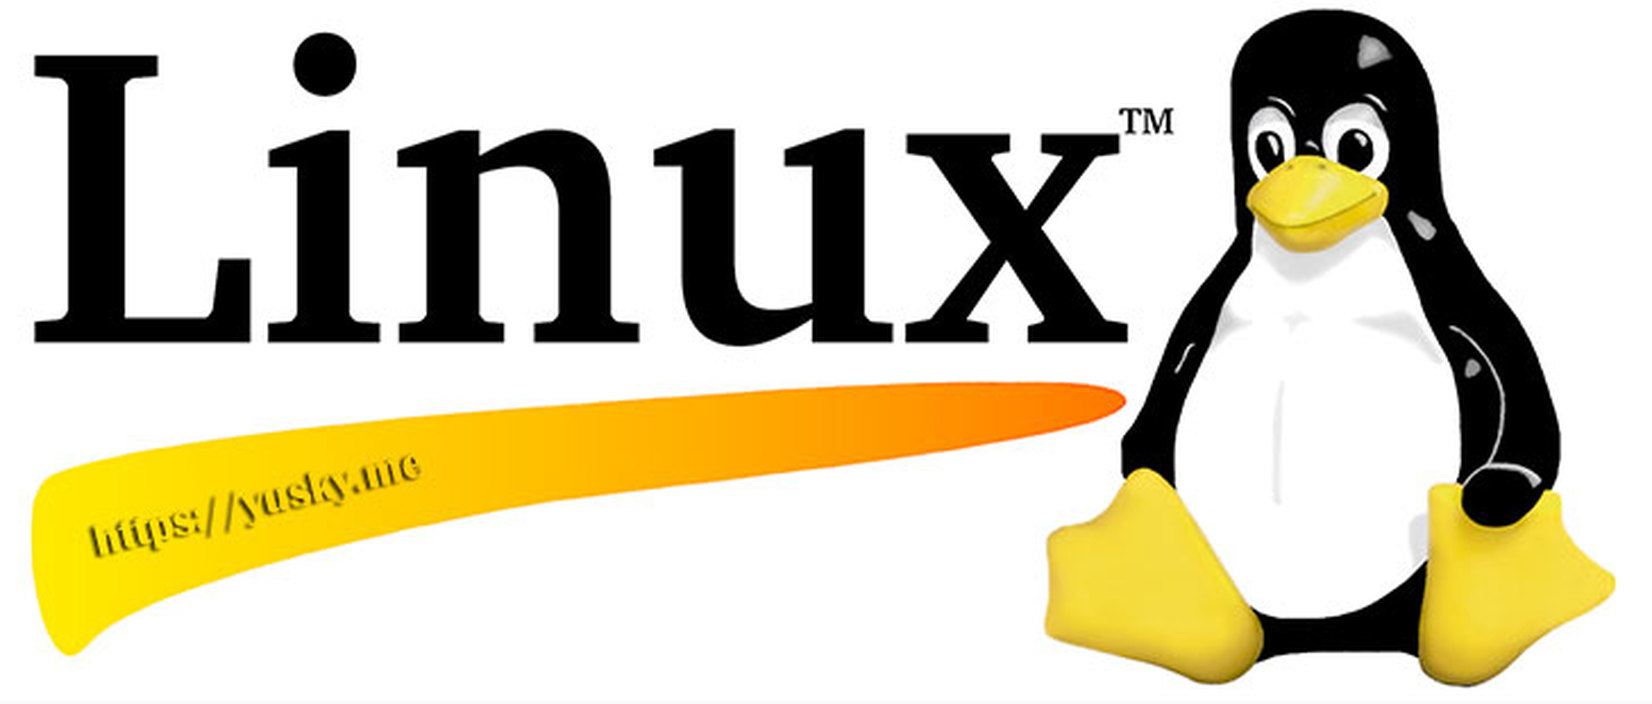 Linux-logo-yusky-me